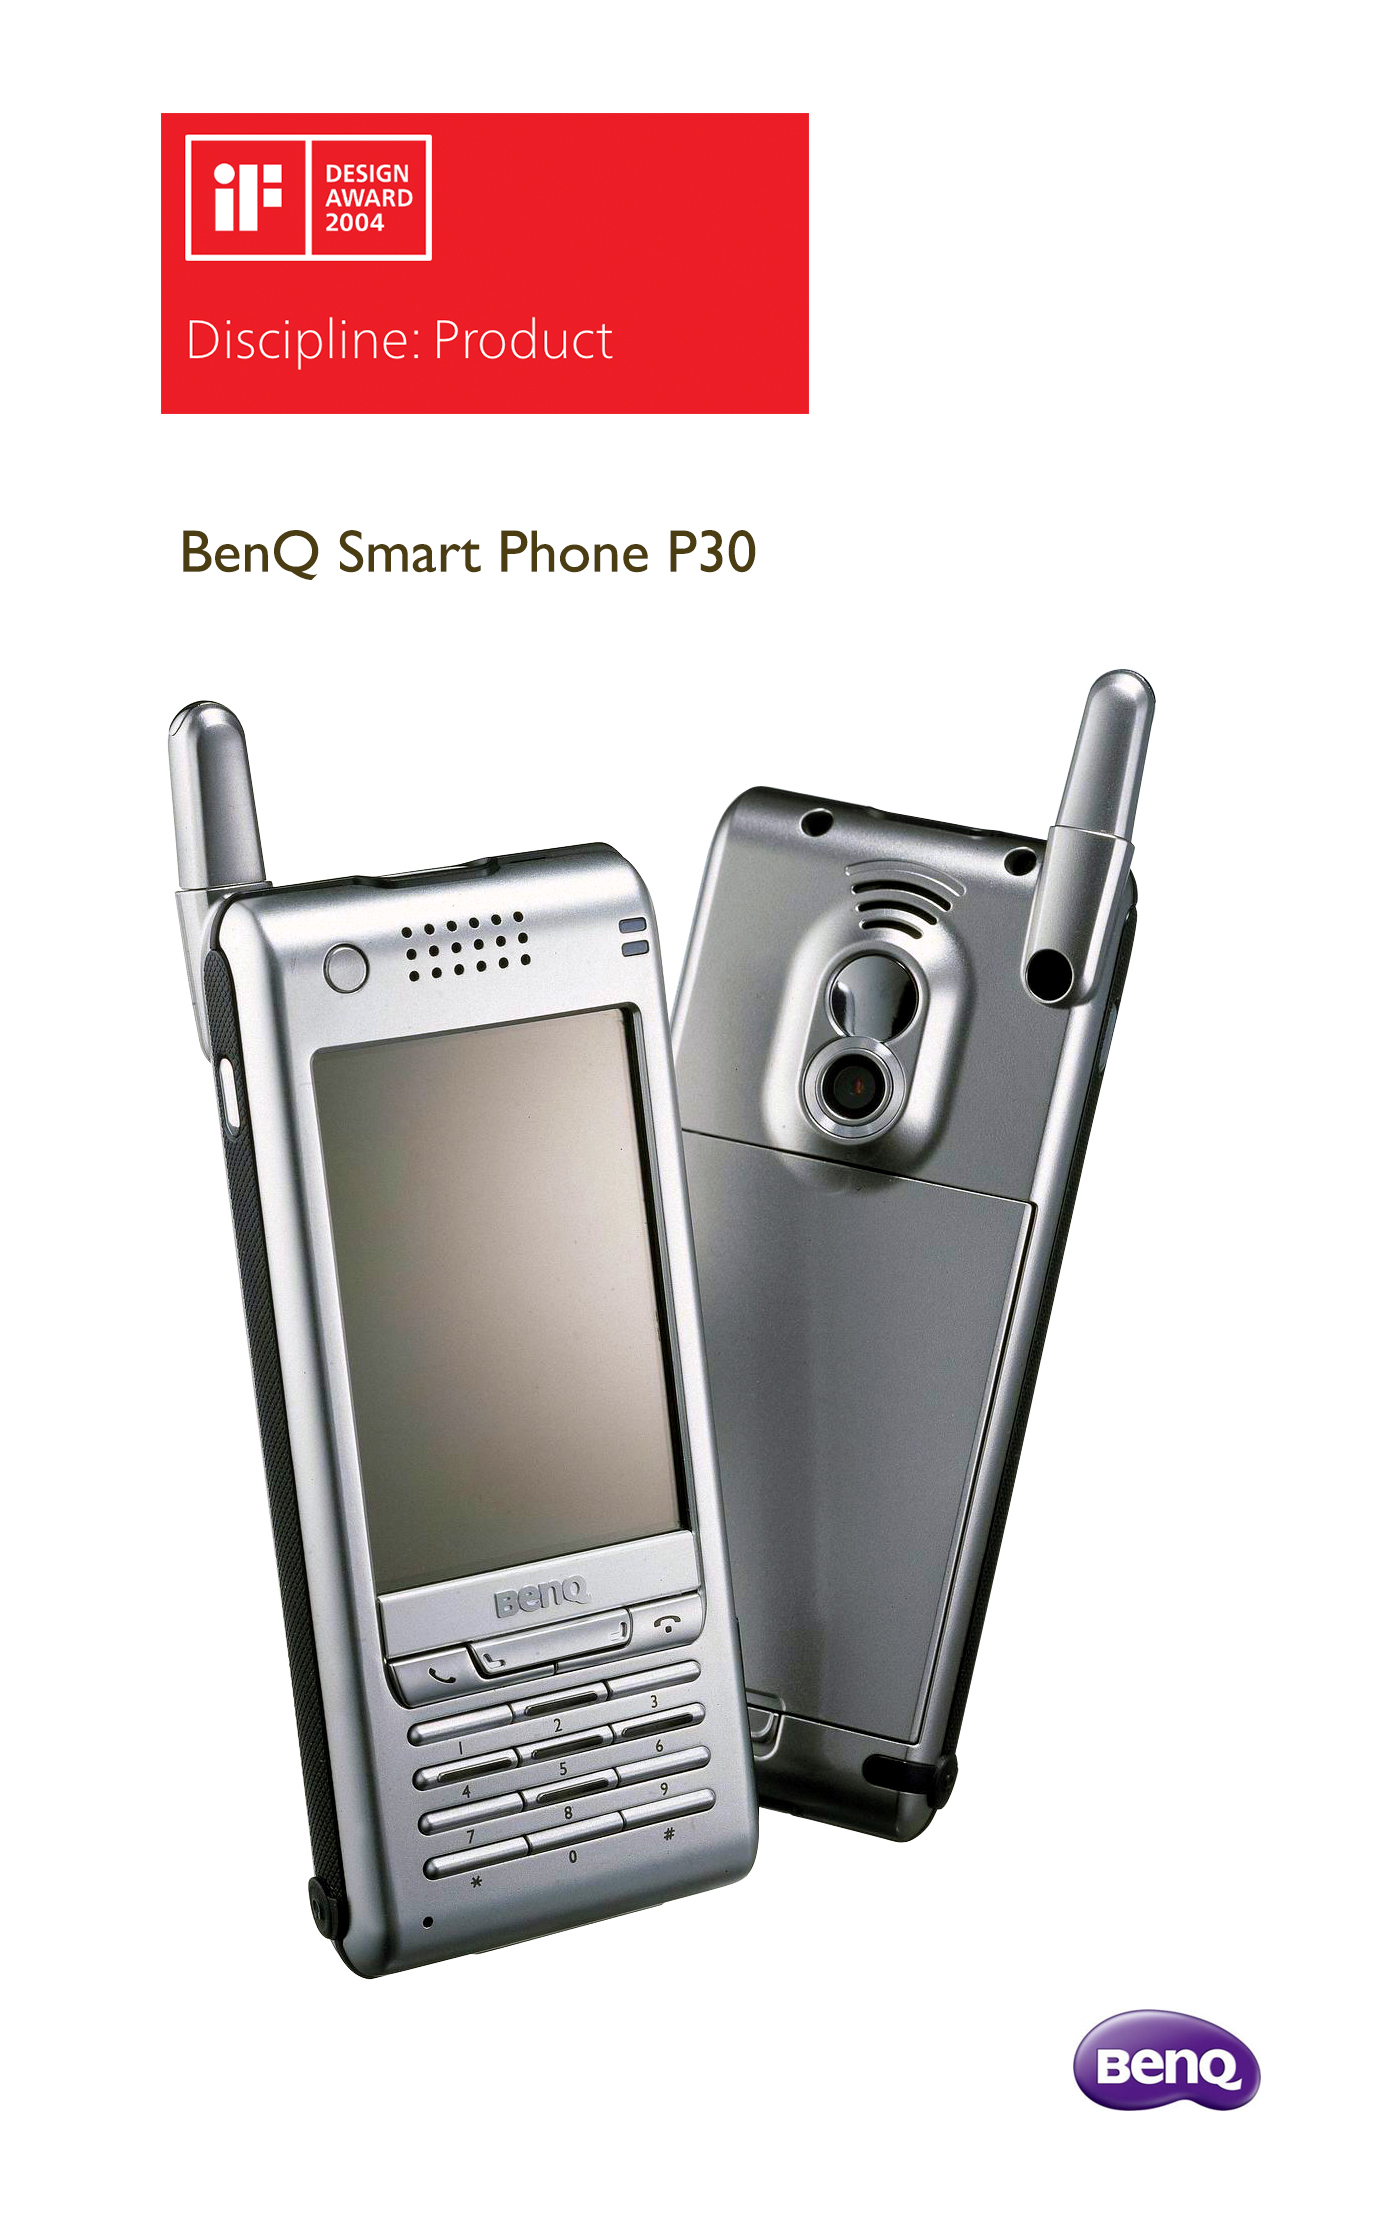 BenQ P30智能手机获颁2004 iF Design Award设计大奖